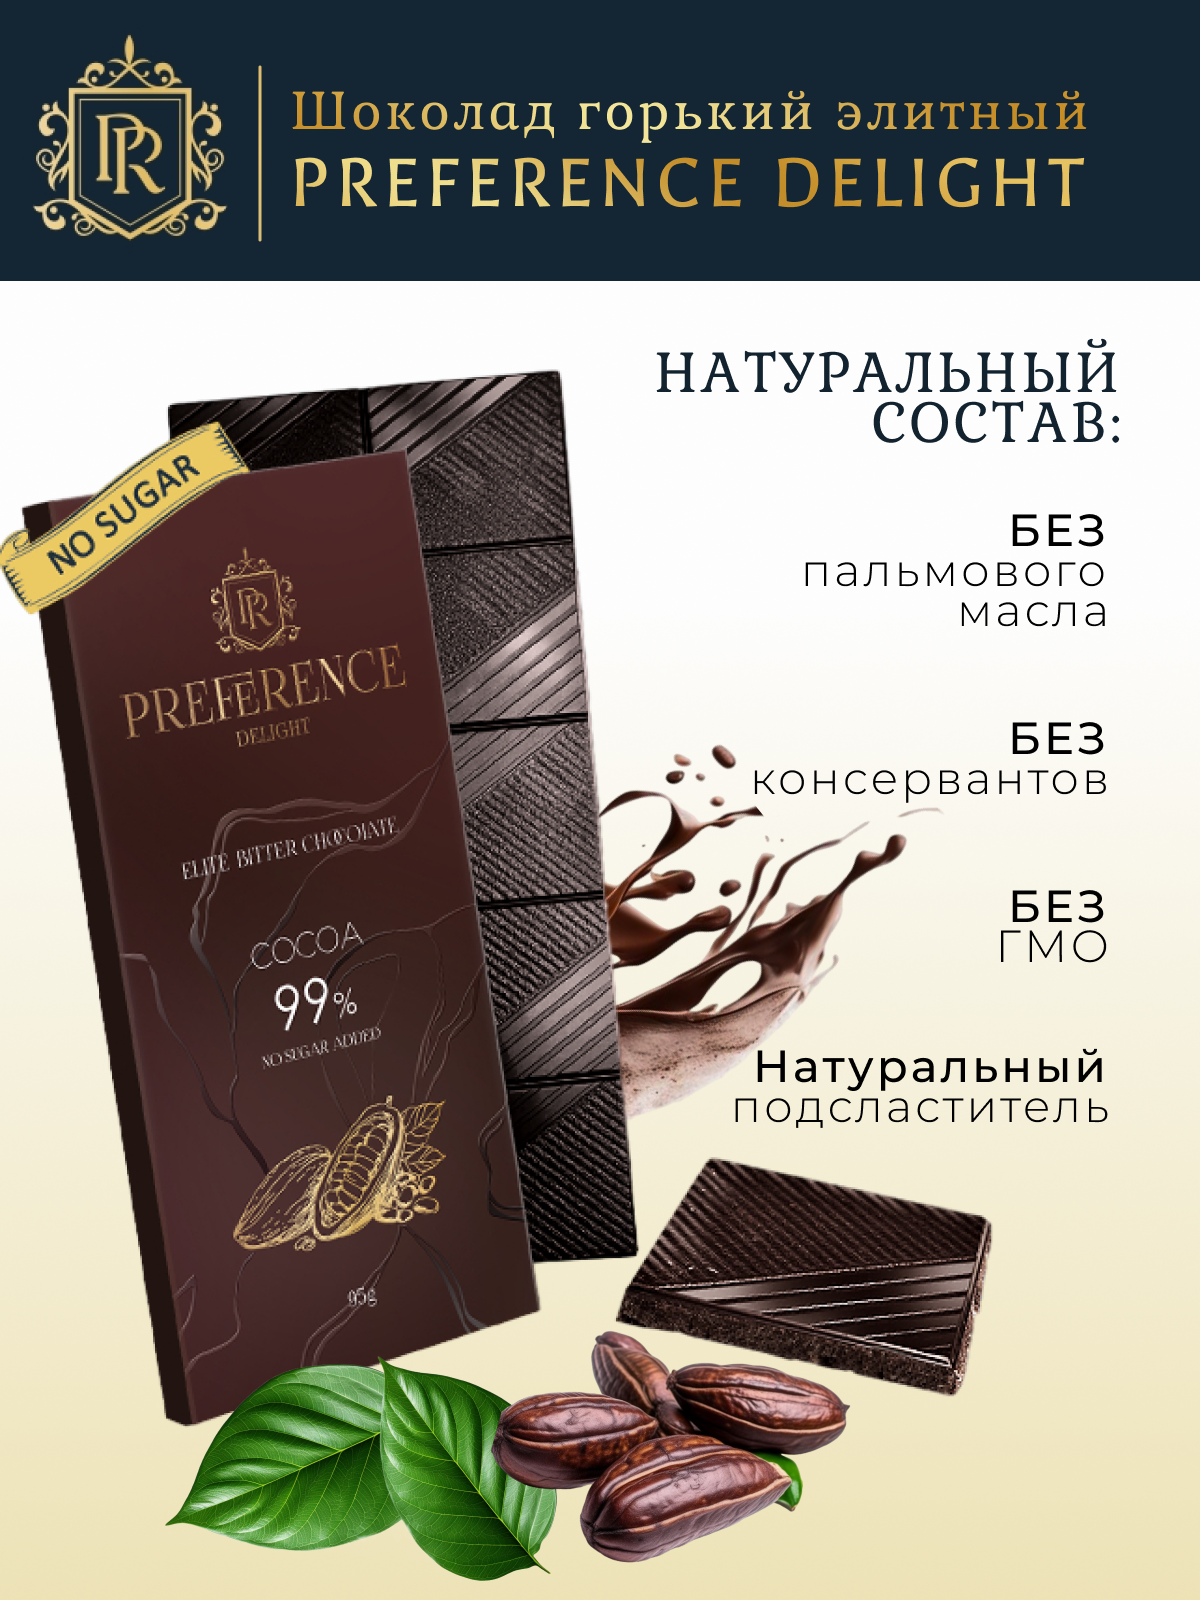 Шоколад горький без сахара 99% PREFERENCE Delight тонкий 4 шт по 95г